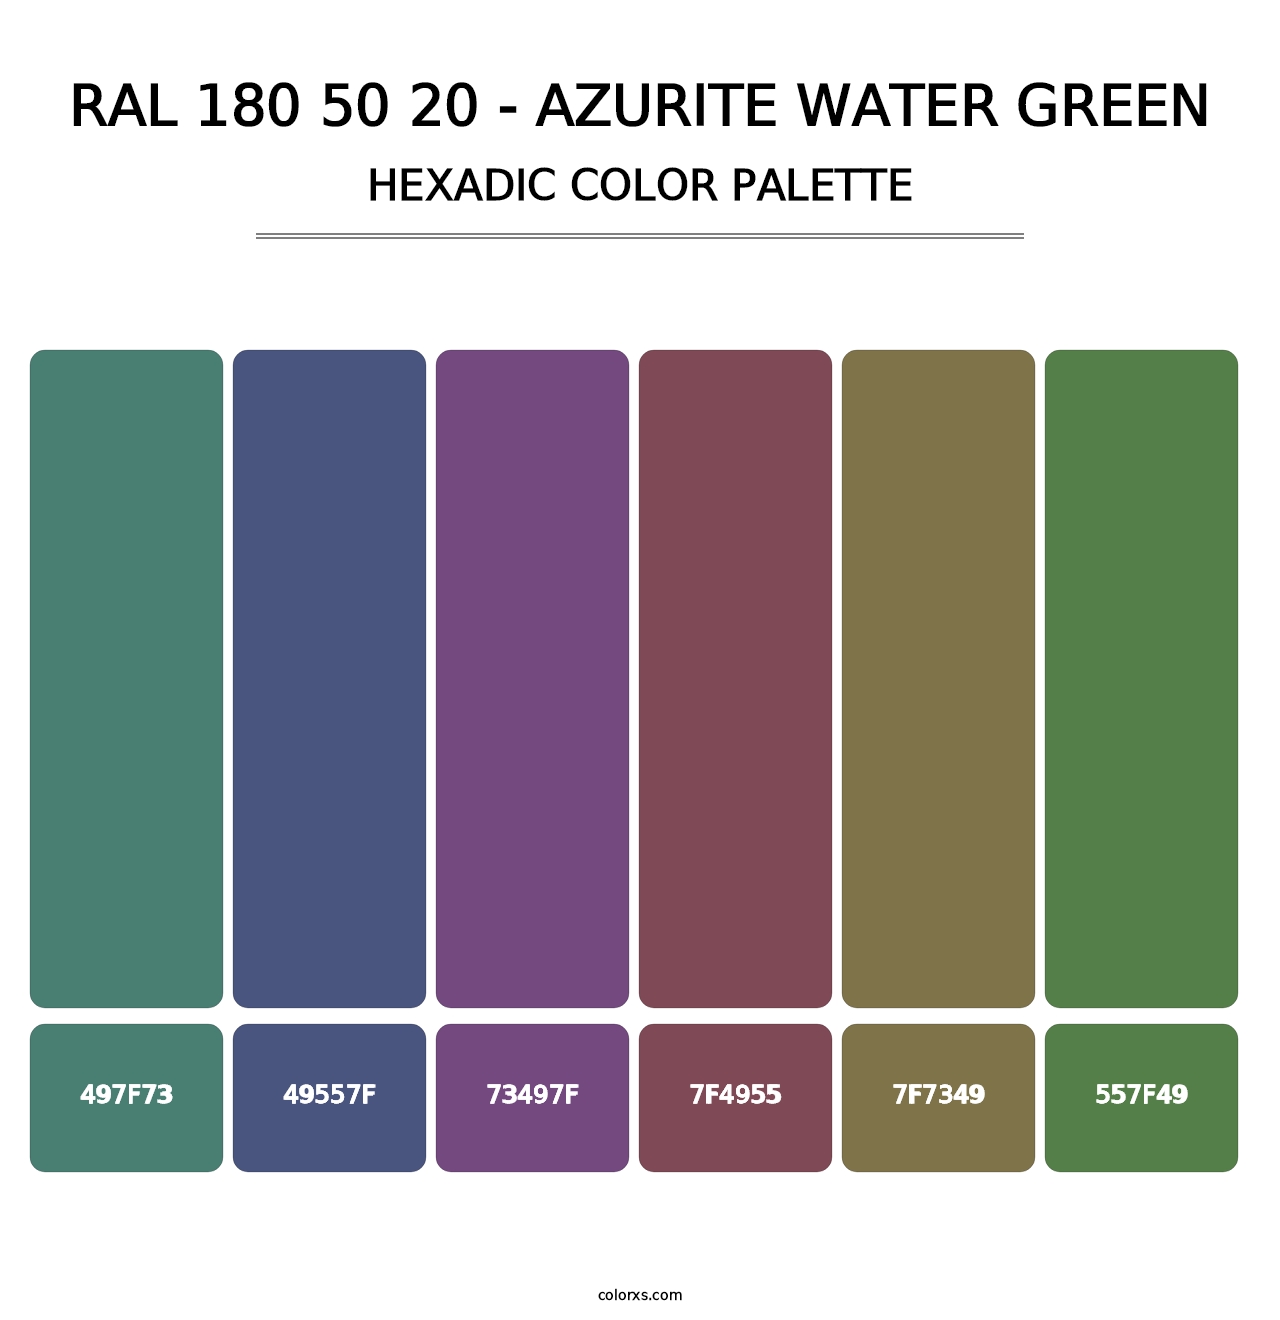 RAL 180 50 20 - Azurite Water Green - Hexadic Color Palette